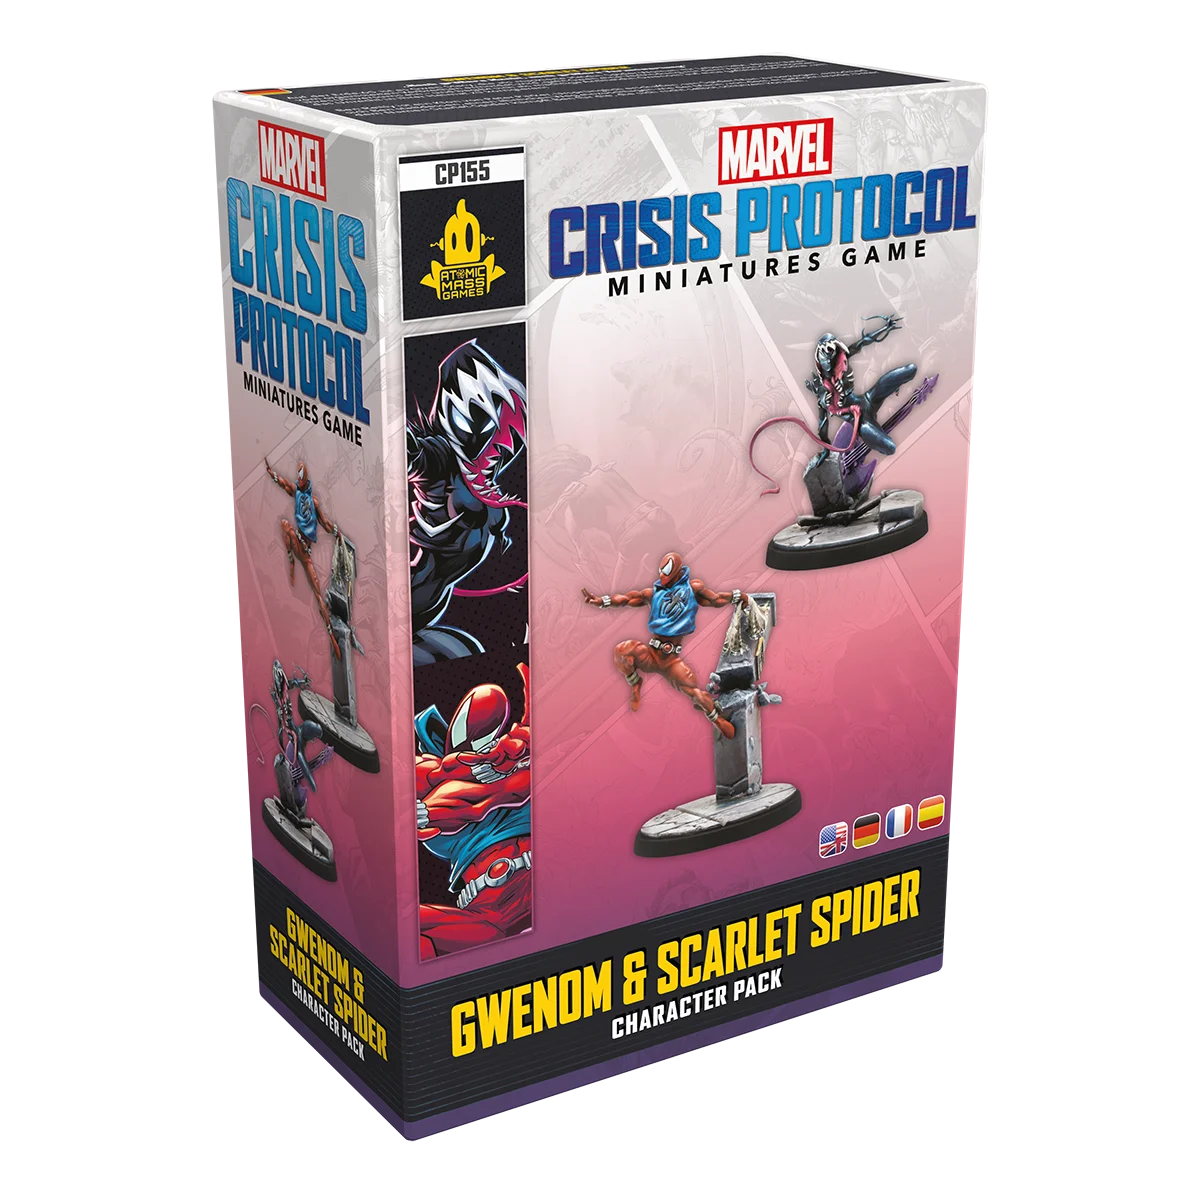 Preorder - Marvel: Crisis Protocol – Gwenom & Scarlet Spider